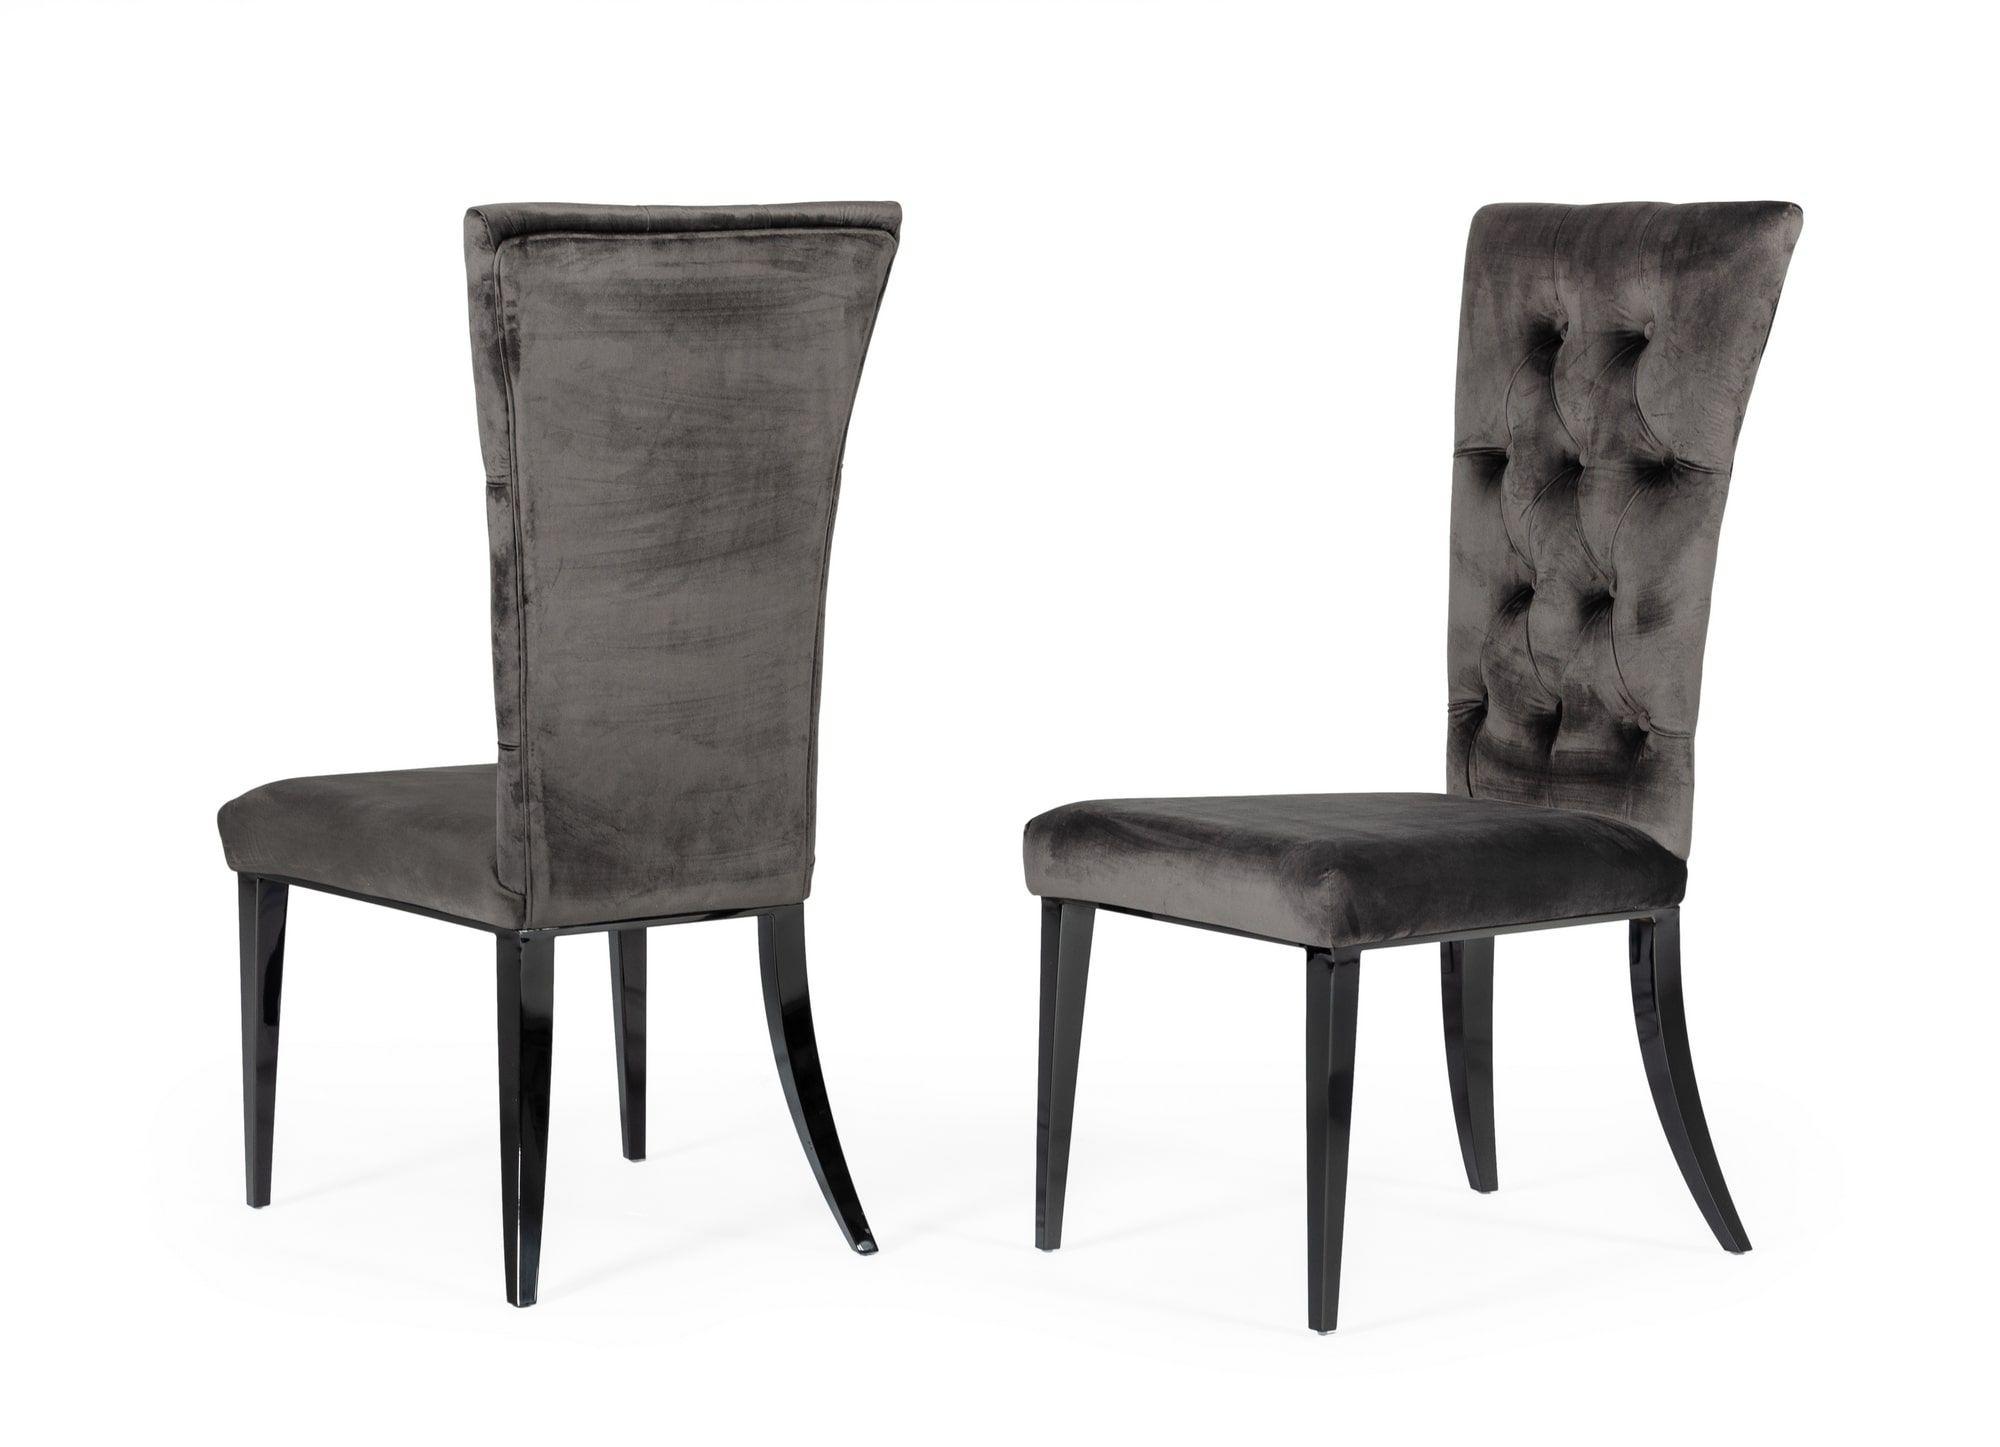 Contemporary, Modern Dining Chair Set Darley VGZAY623-GRY-2pcs in Gray, Black Velvet